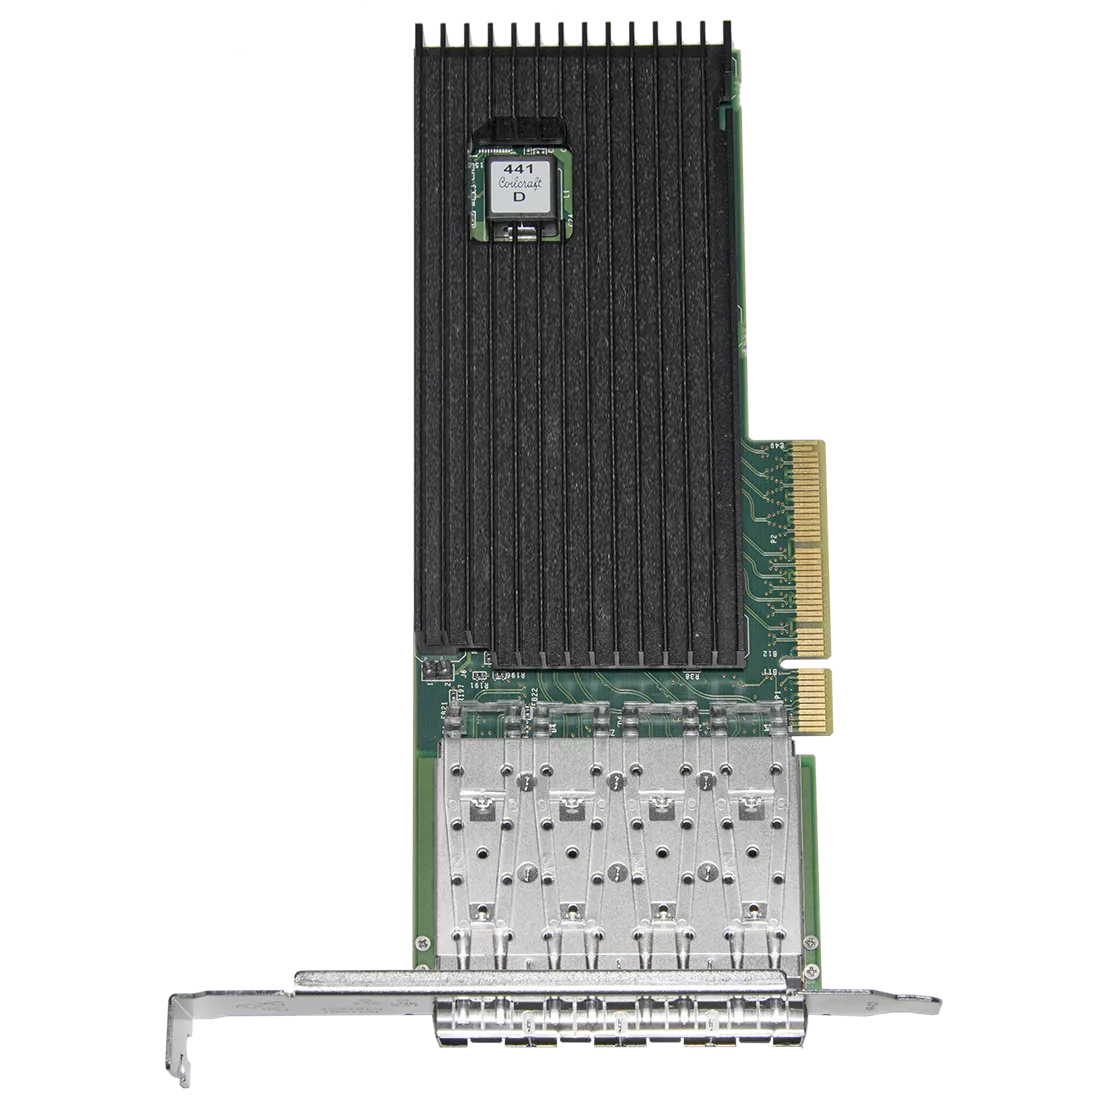 Сетевая карта 4 порта 10GBase-X (SFP+, Intel FTXL710AM1), Silicom PE310G4i71LB-XR